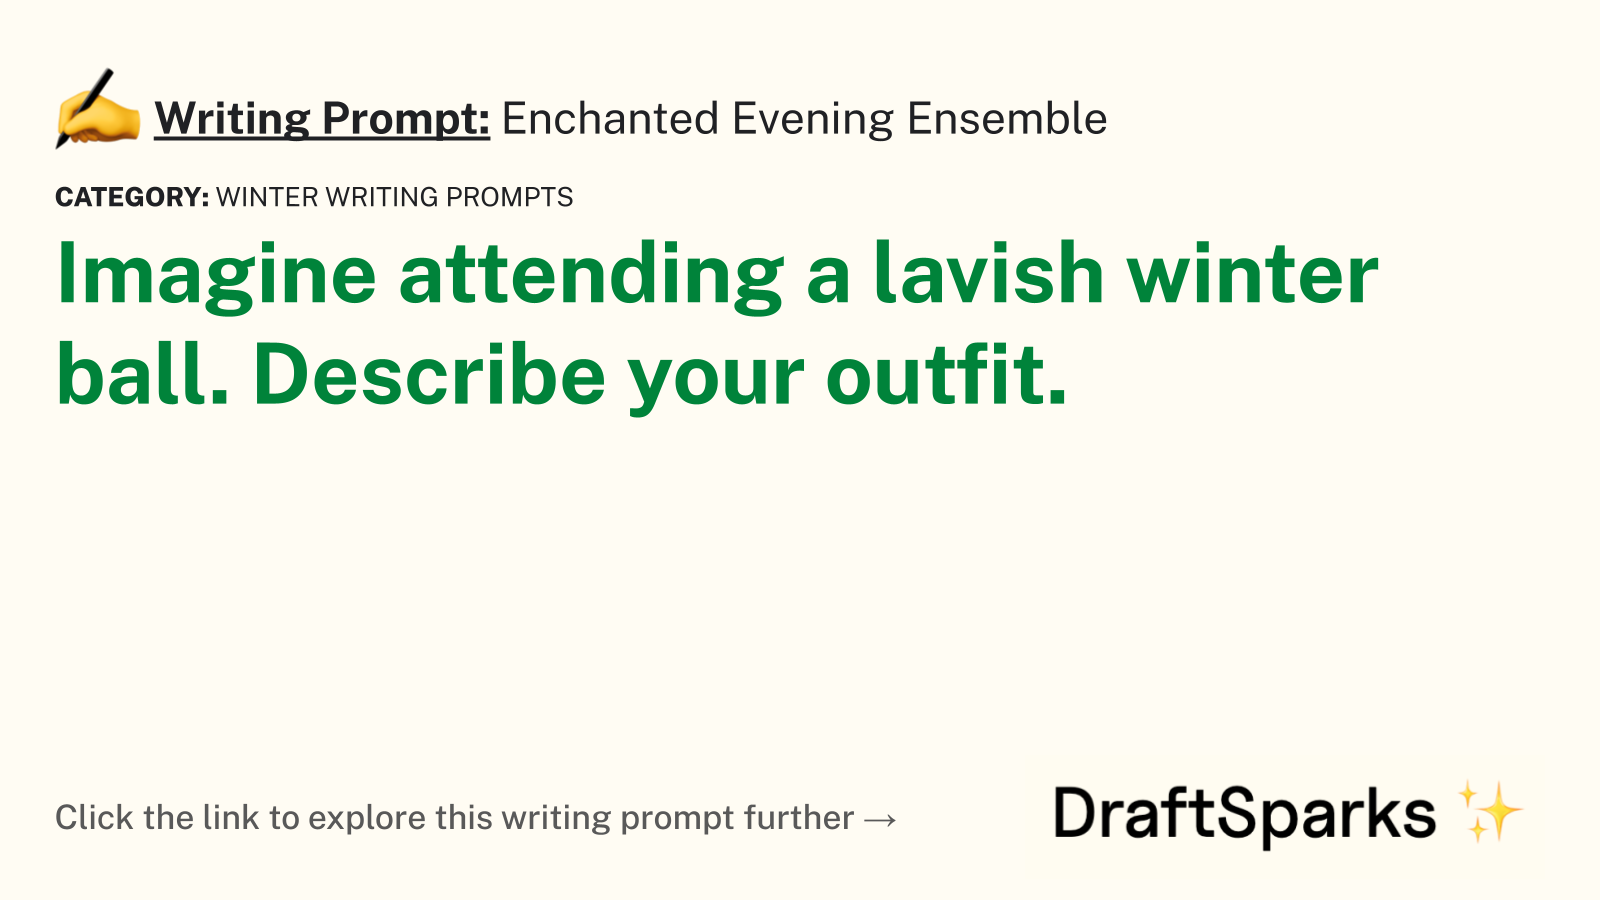 Enchanted Evening Ensemble